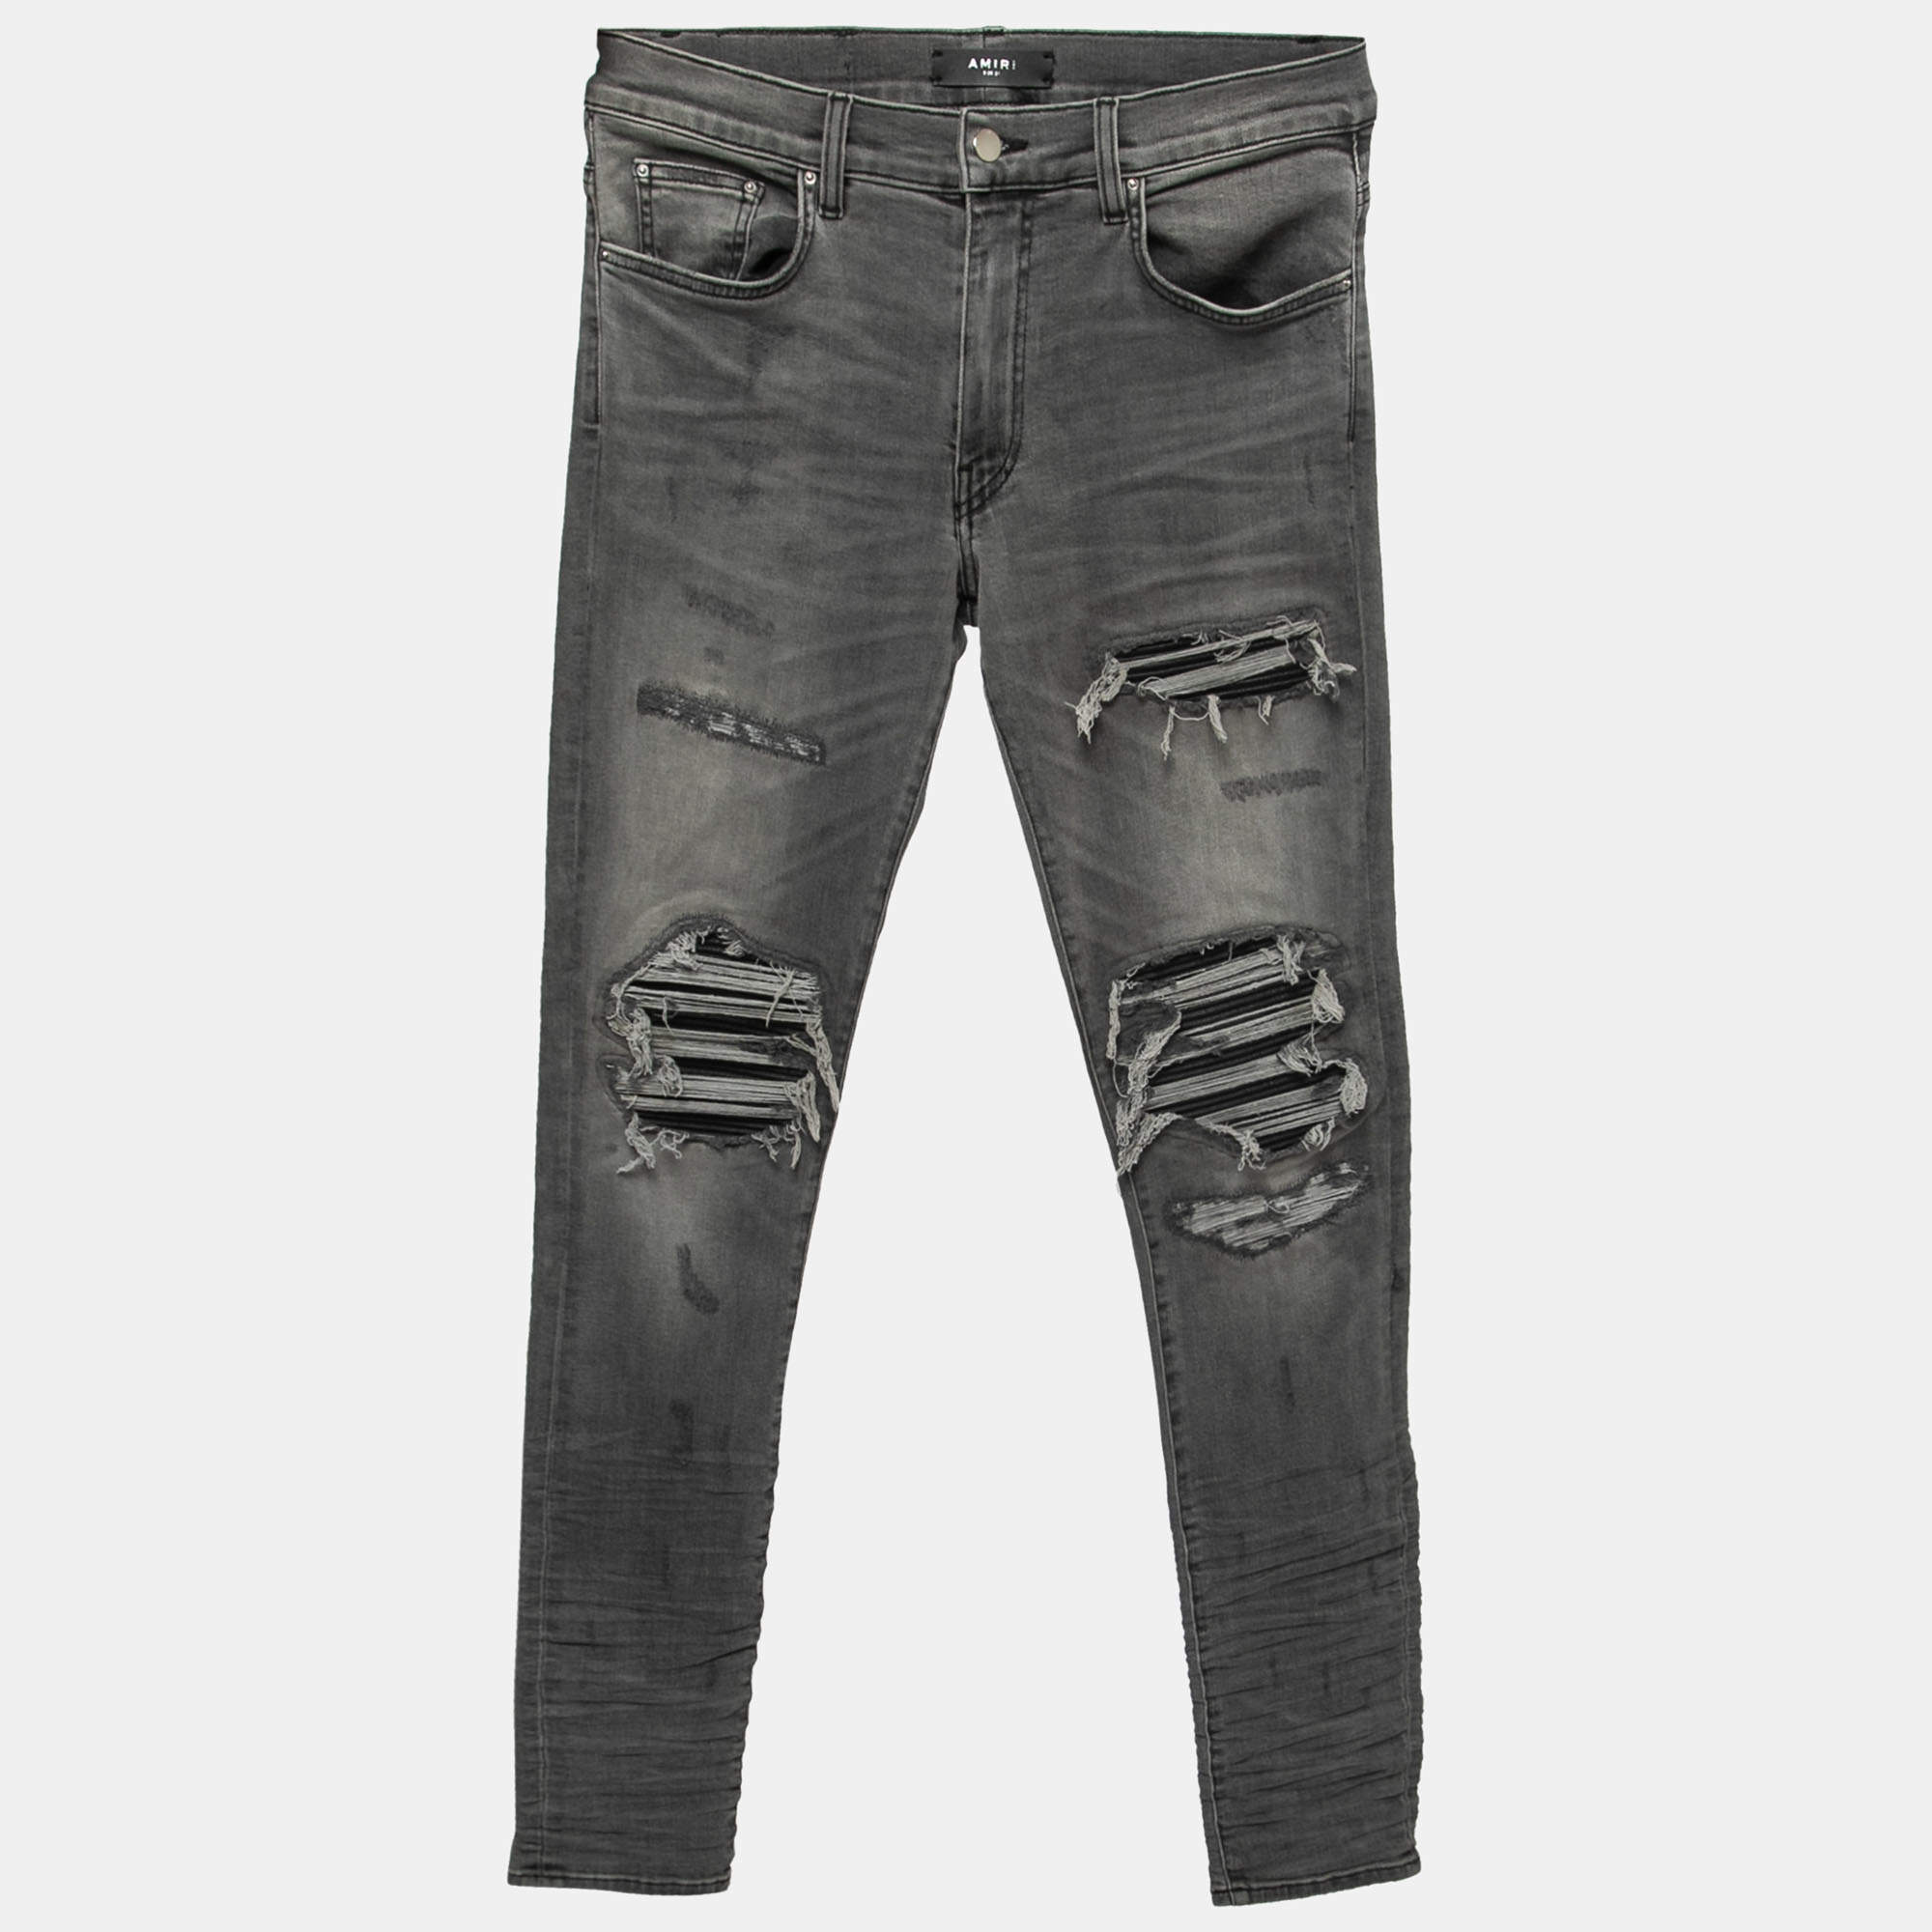 Amiri Grey Distressed Denim Skinny Jeans M Waist 31